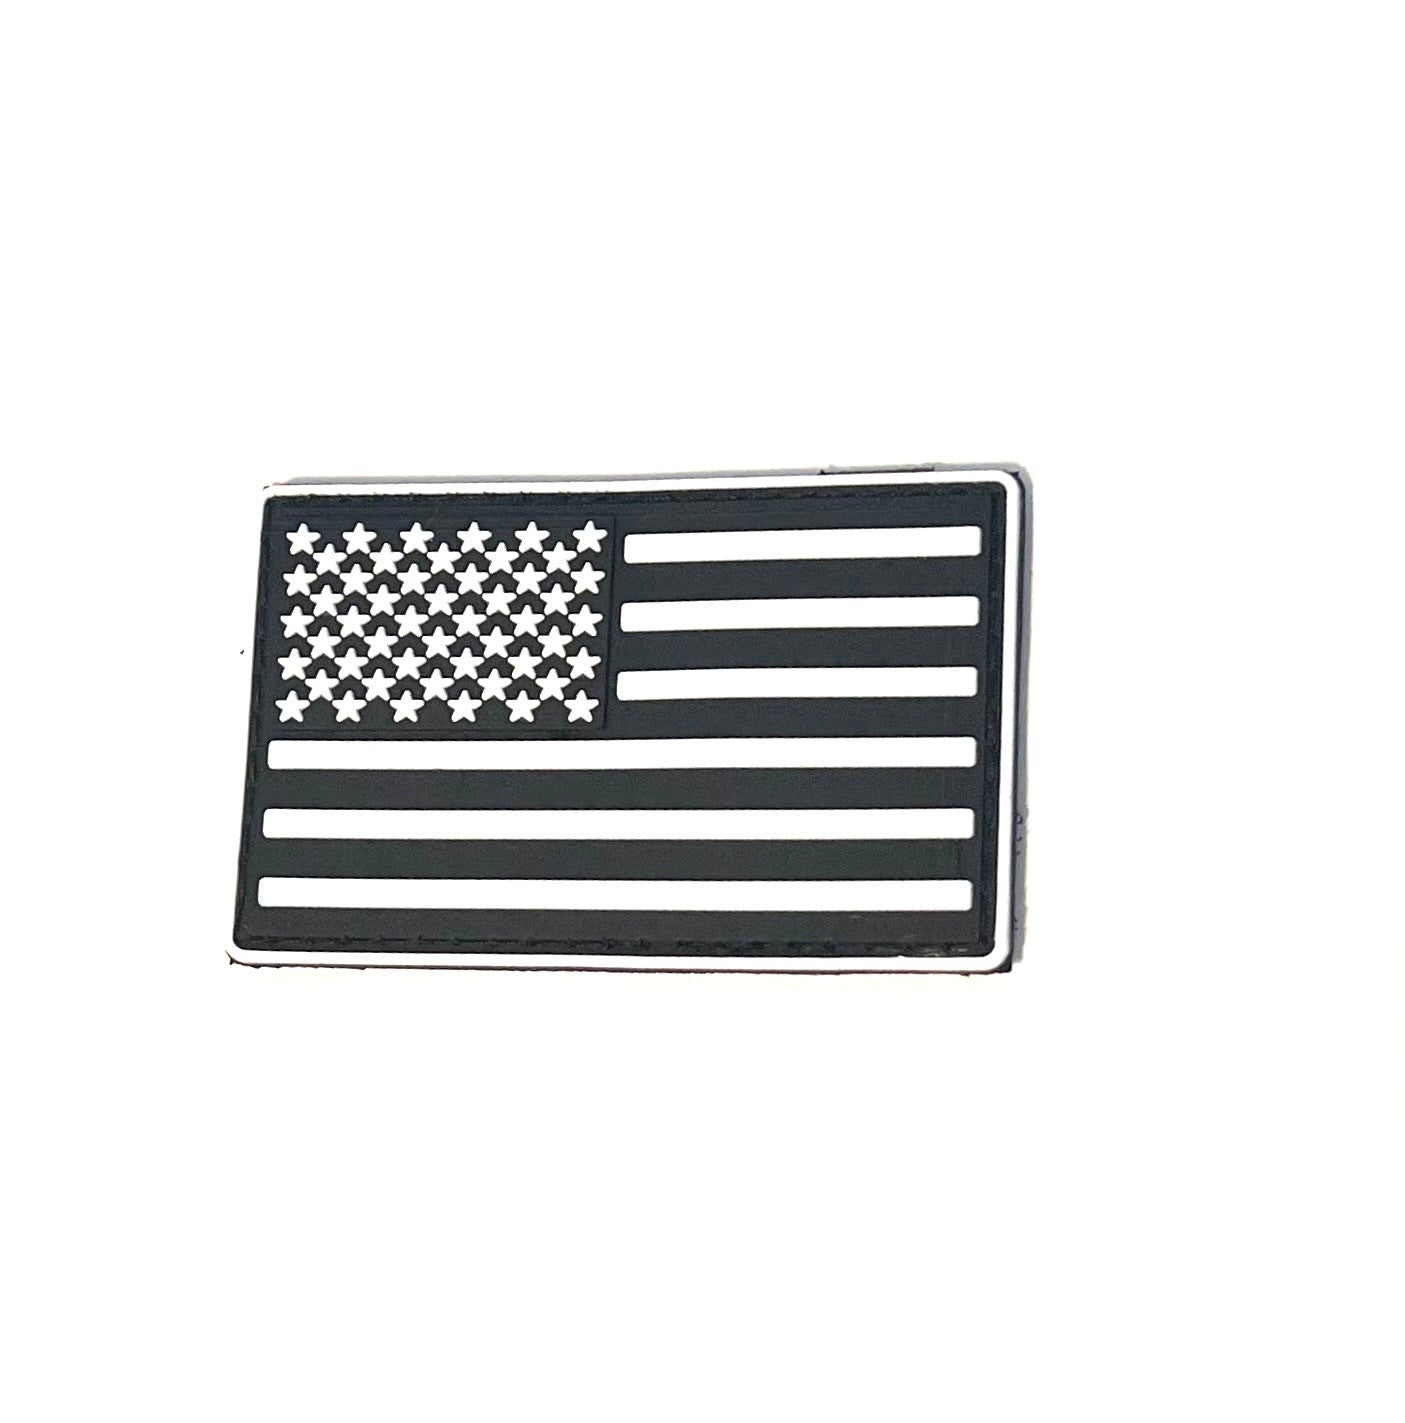 TFG PVC American Flag Patch